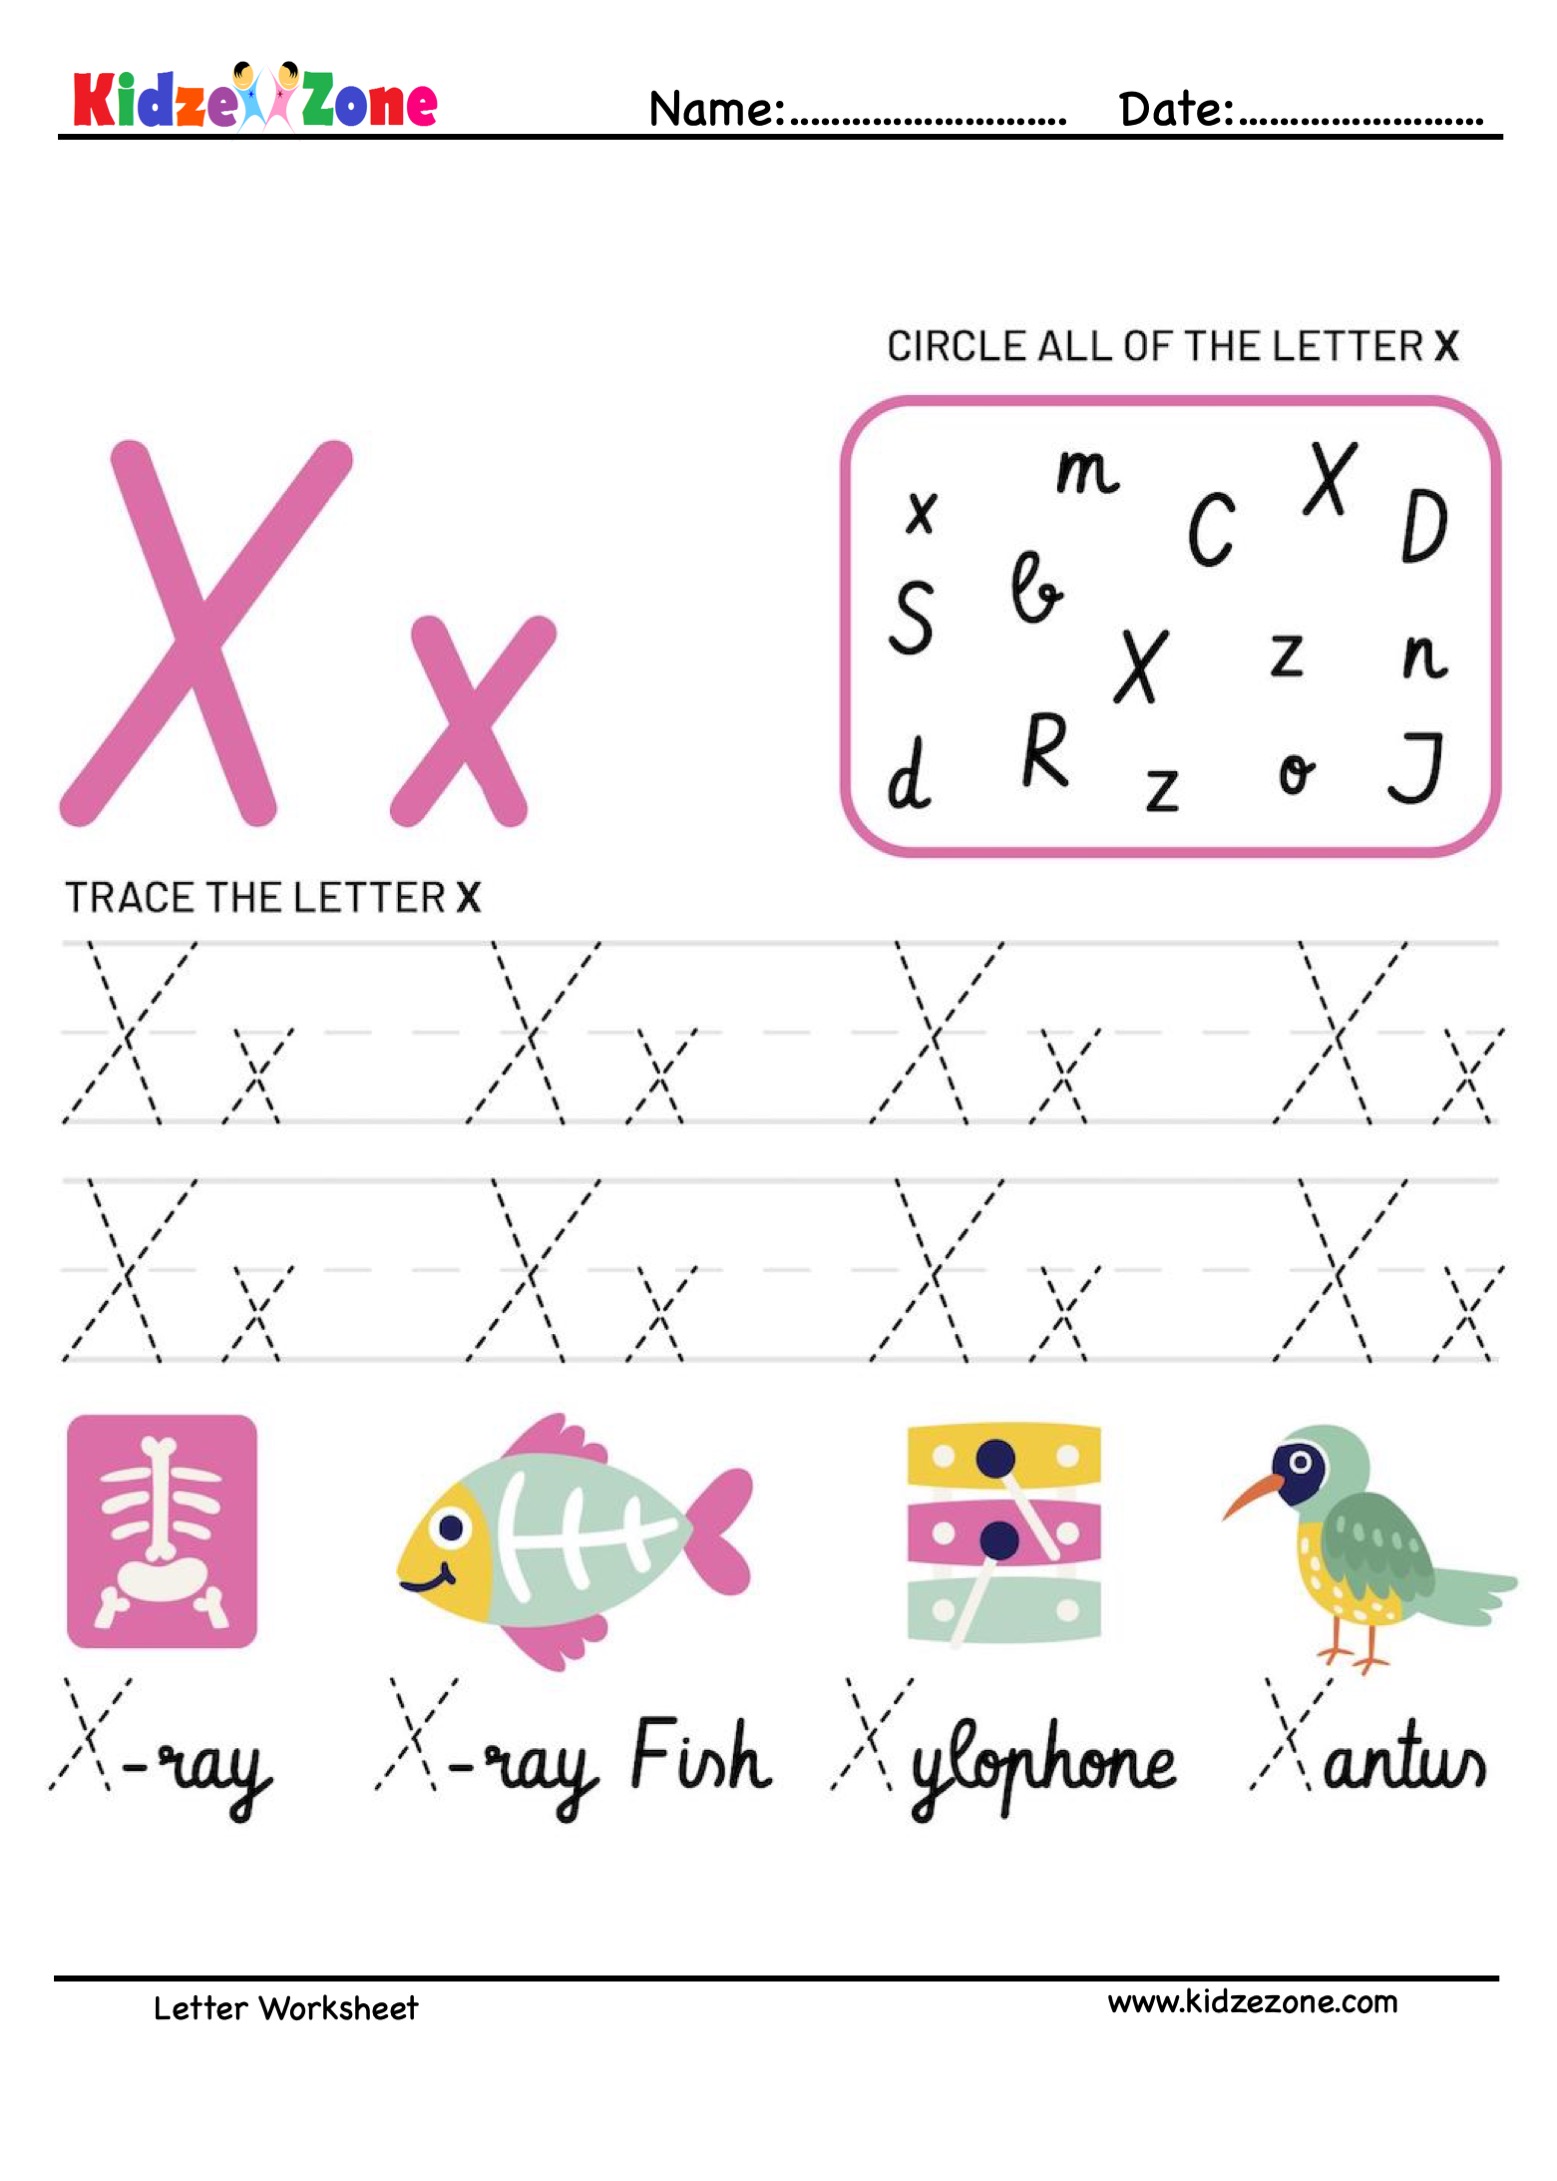 letter-x-worksheets-for-kids-online-splashlearn-free-letter-x-tracing-worksheets-andre-woods